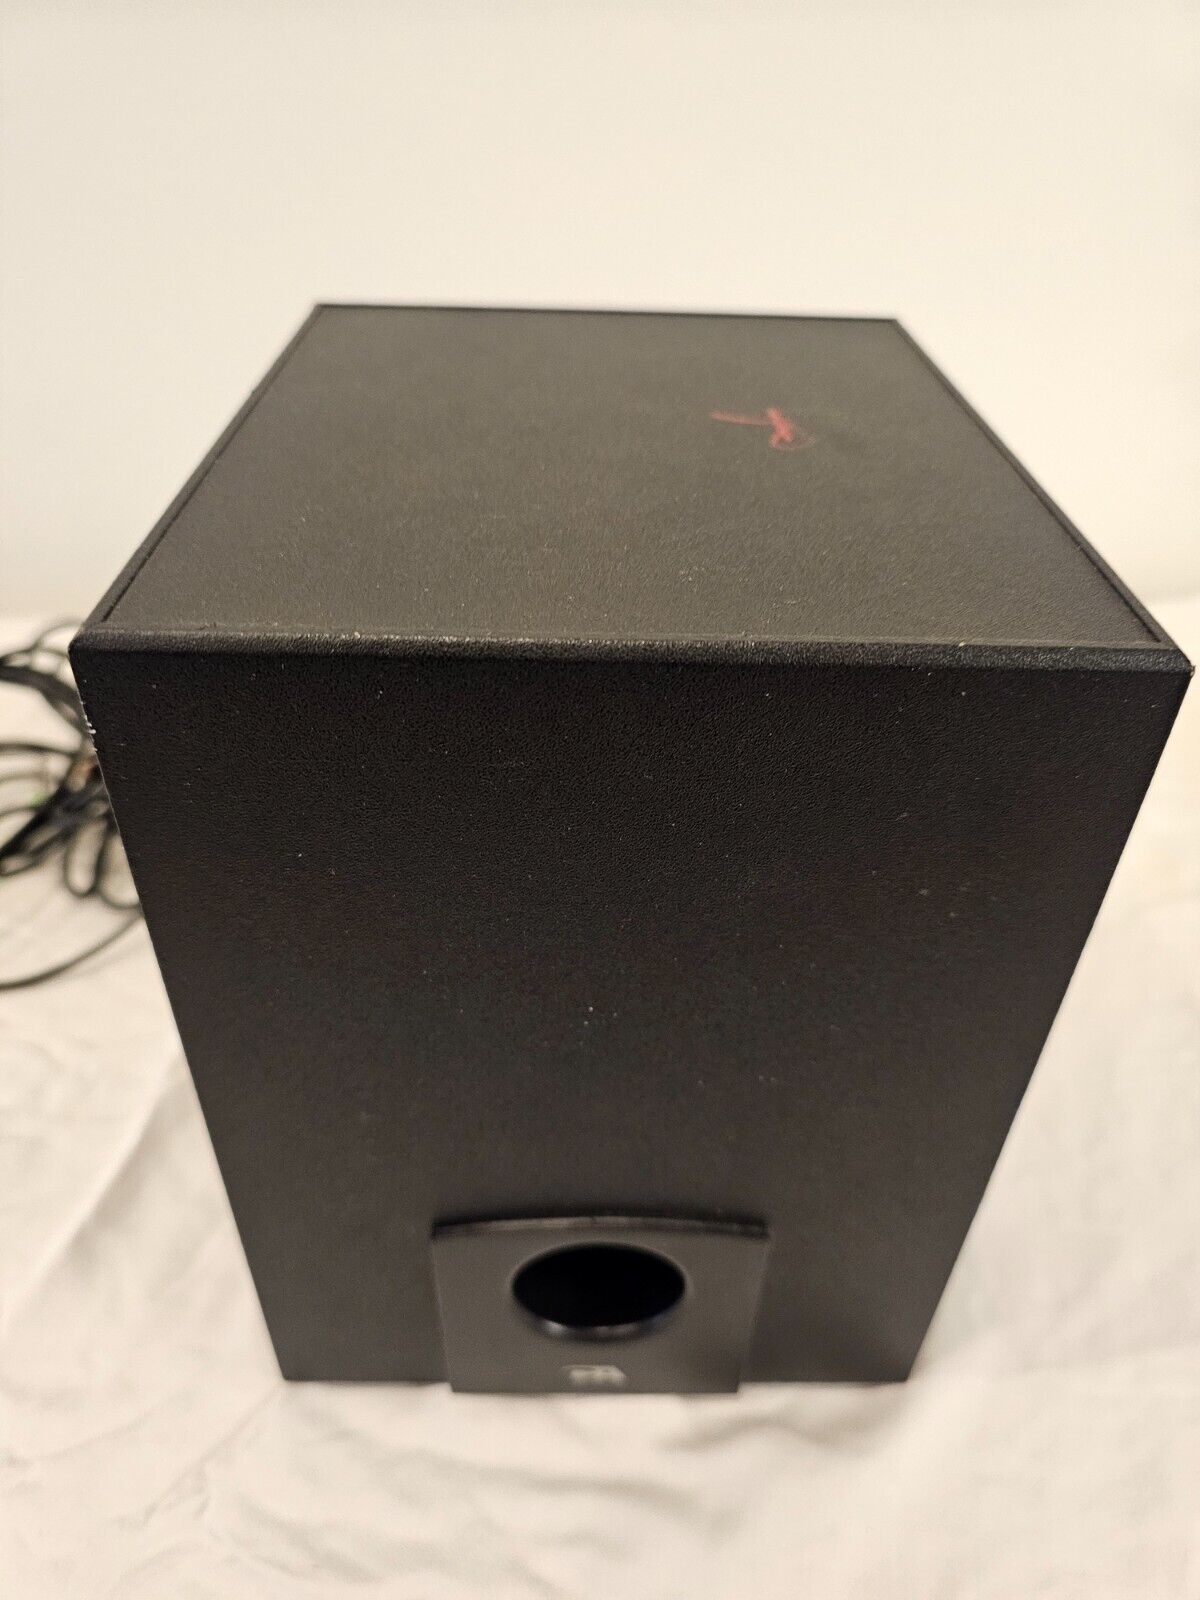 Cyber Acoustic CA-3080 PC Multimedia 2.1 Sound System Speaker Subwoofer - Black